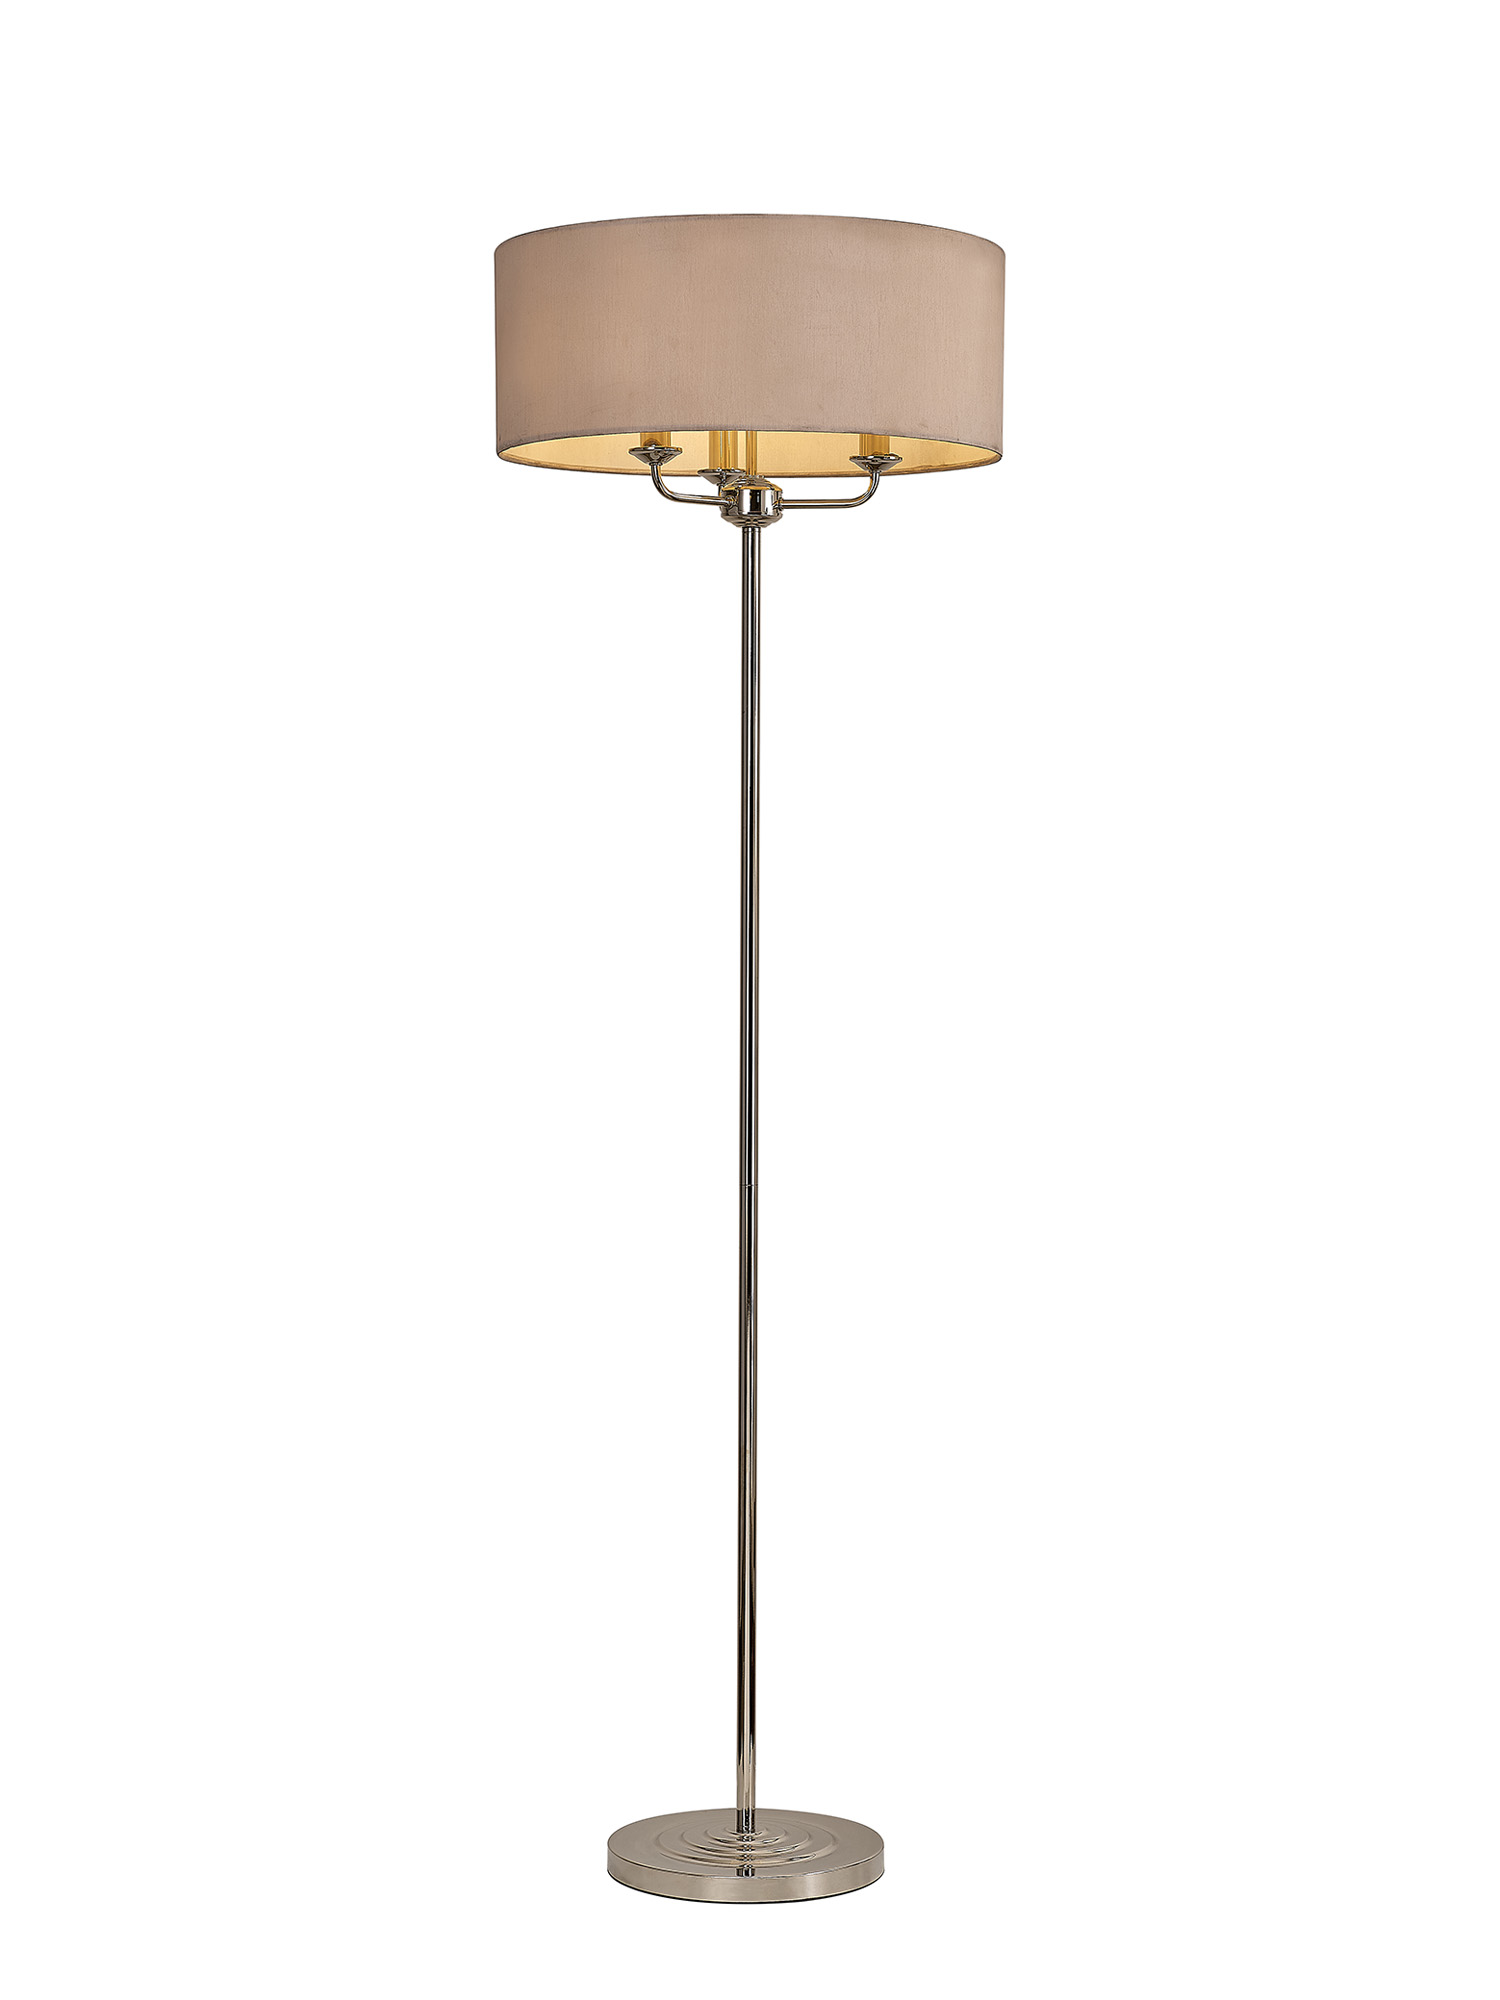 DK0896  Banyan 45cm 3 Light Floor Lamp Polished Nickel, Nude Beige